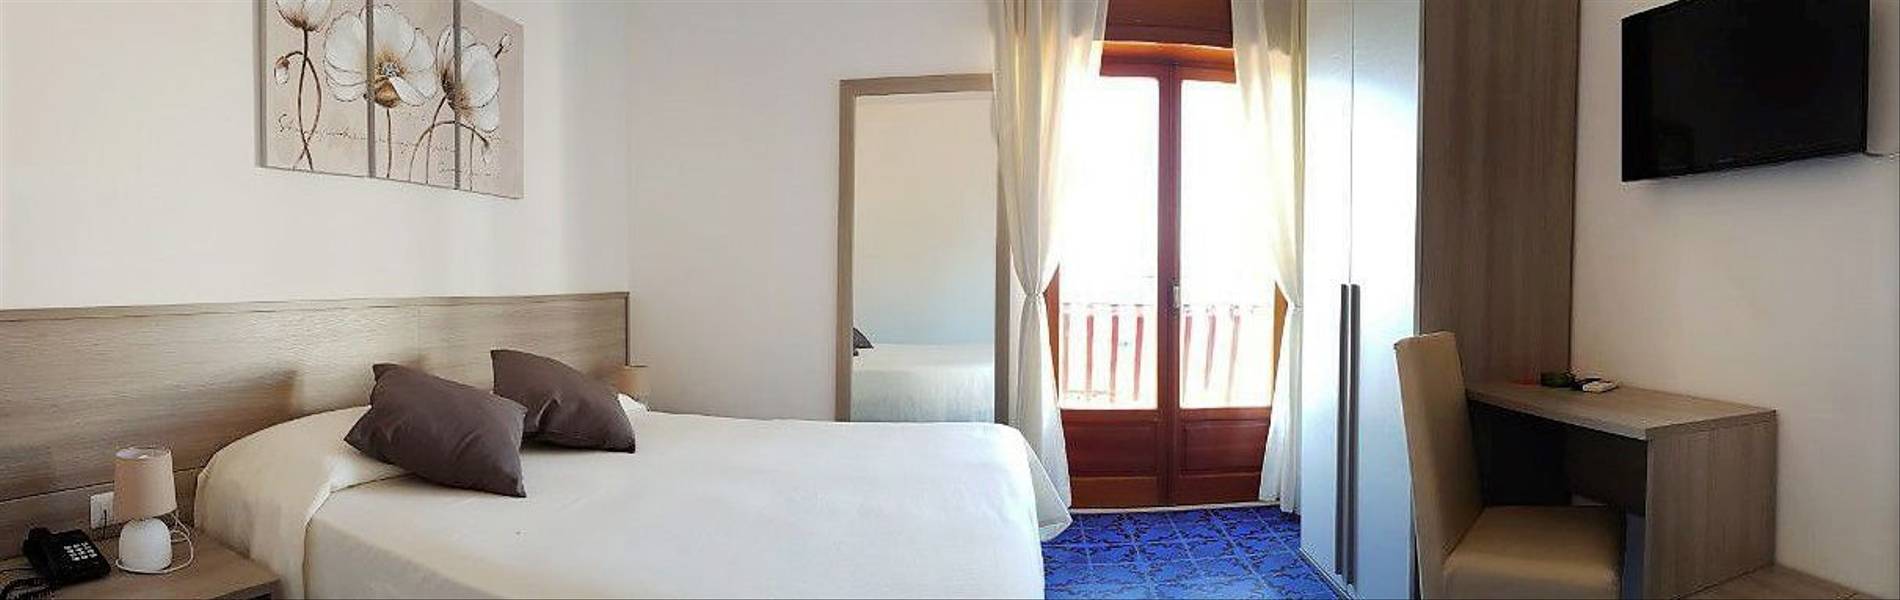 Costa Azzurra, Calabria, Italy, Hotel Room.jpg